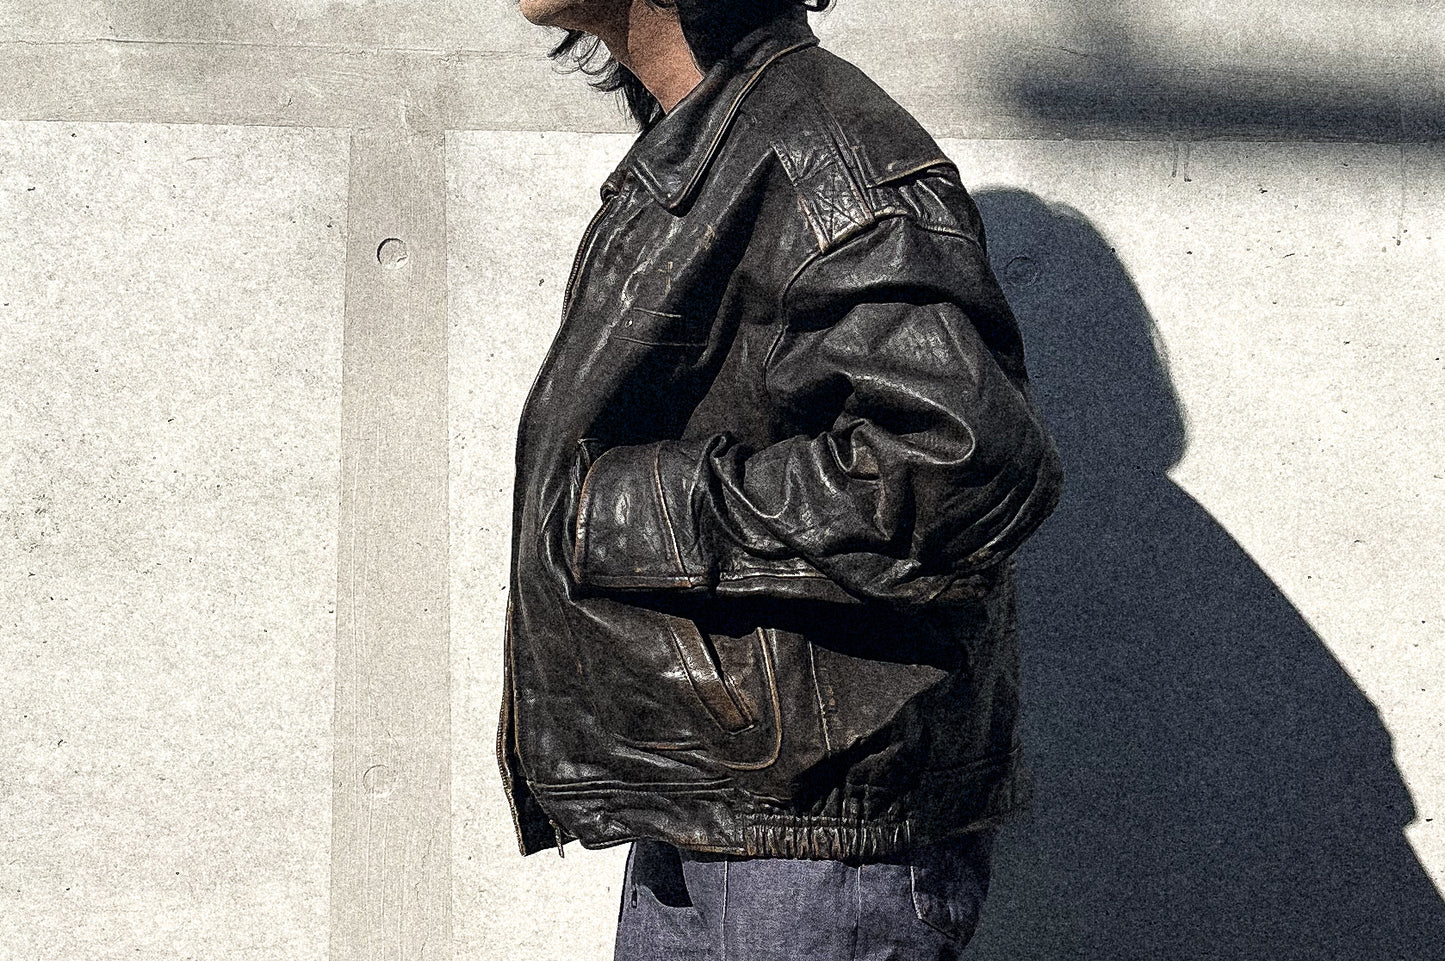 EURO French Leather Jacket vintage 80-90s